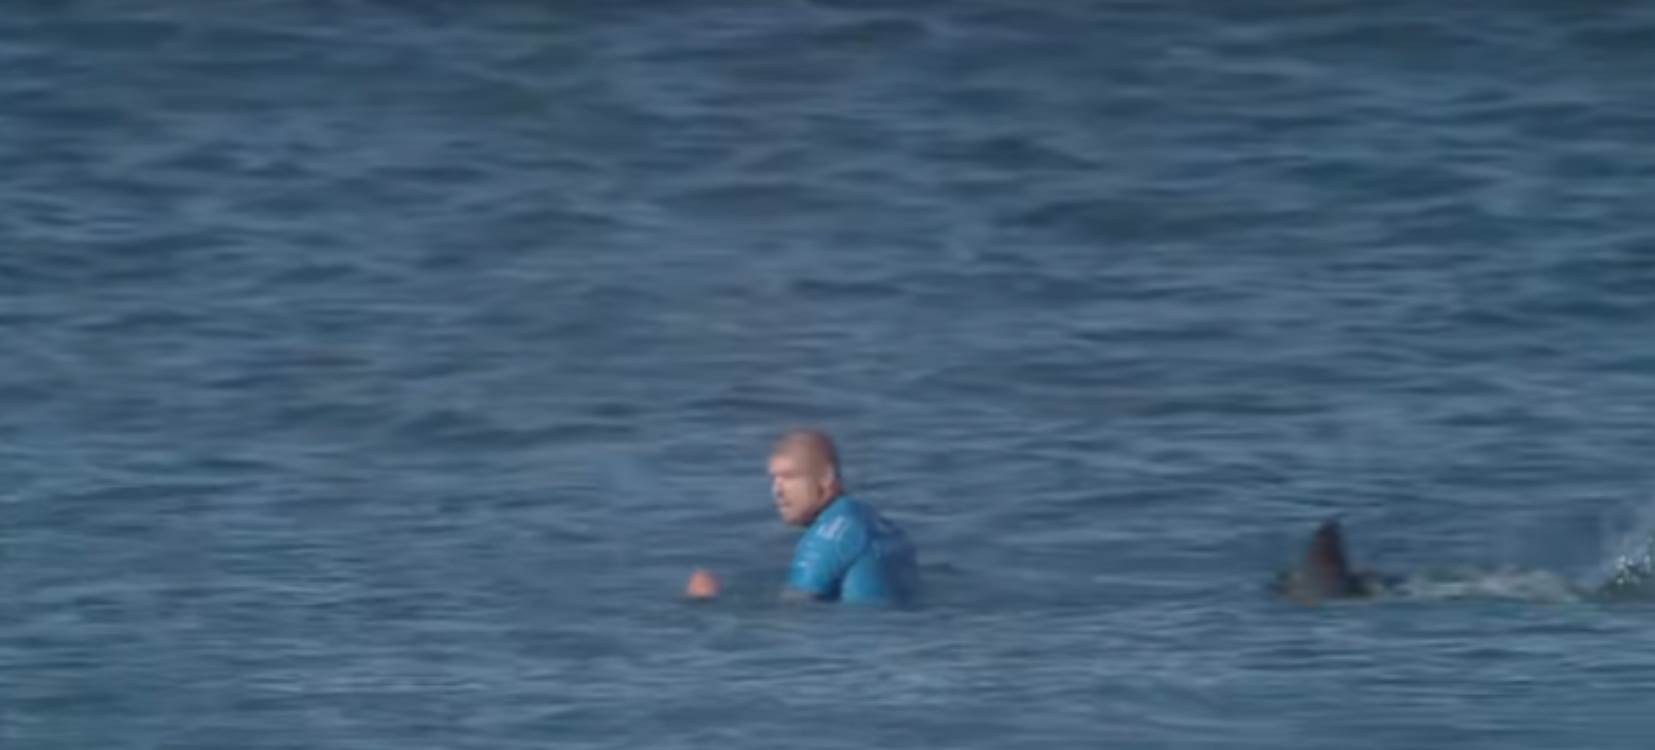  Australija surfer ajkula napad smrt video 